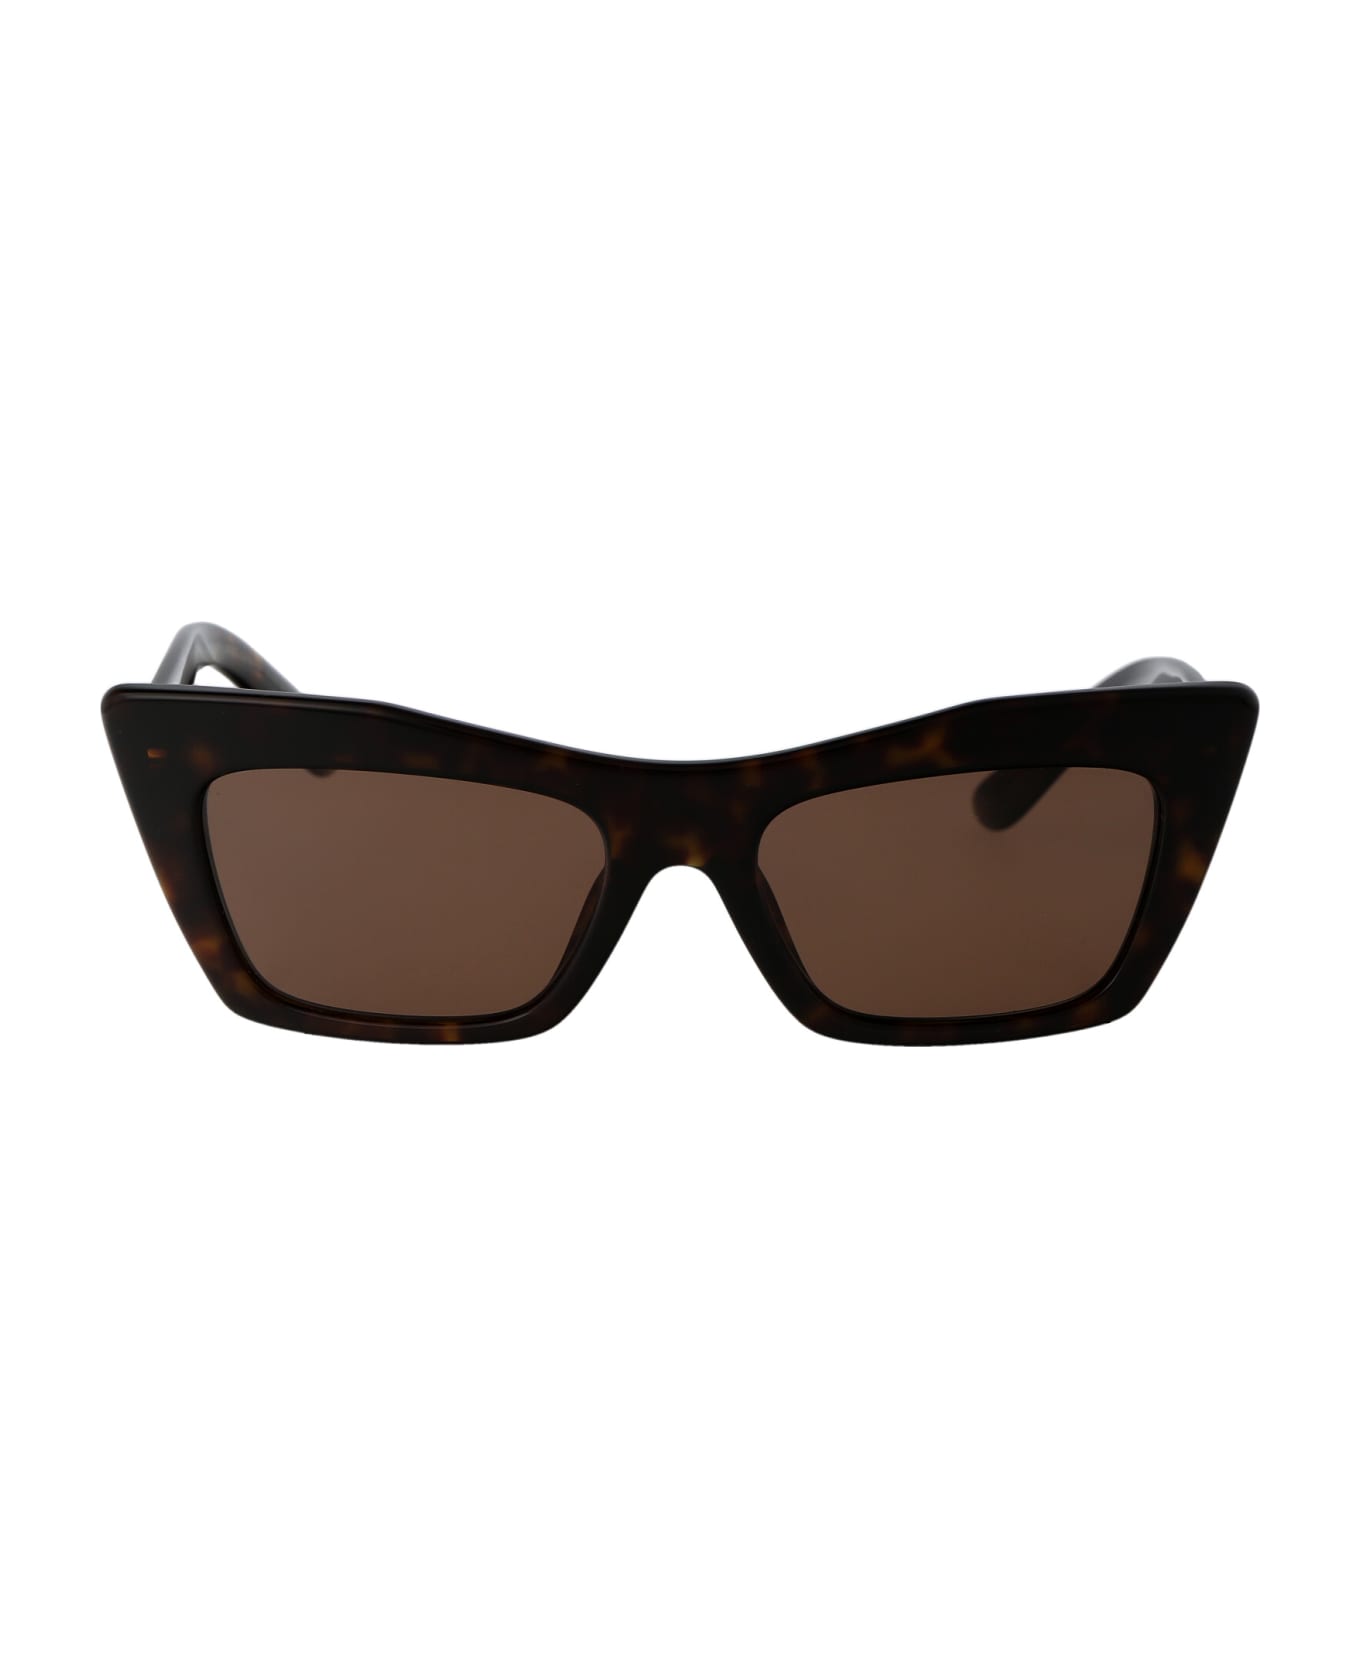 Dolce & Gabbana Eyewear 0dg4435 Sunglasses - 502/73 HAVANA サングラス